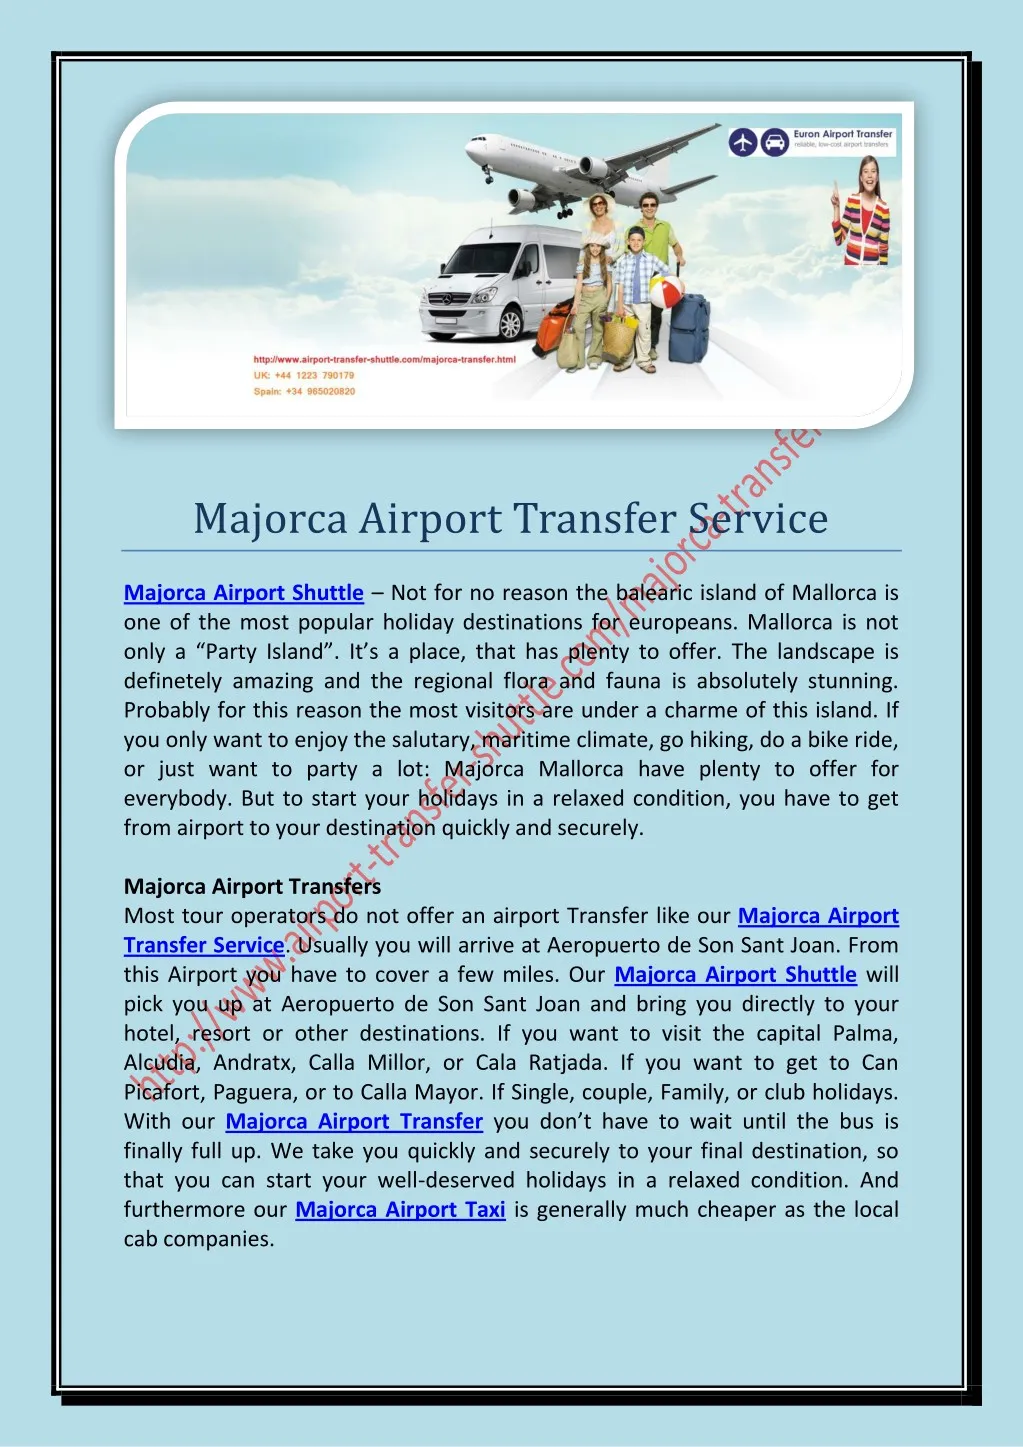 majorca airport transfer service